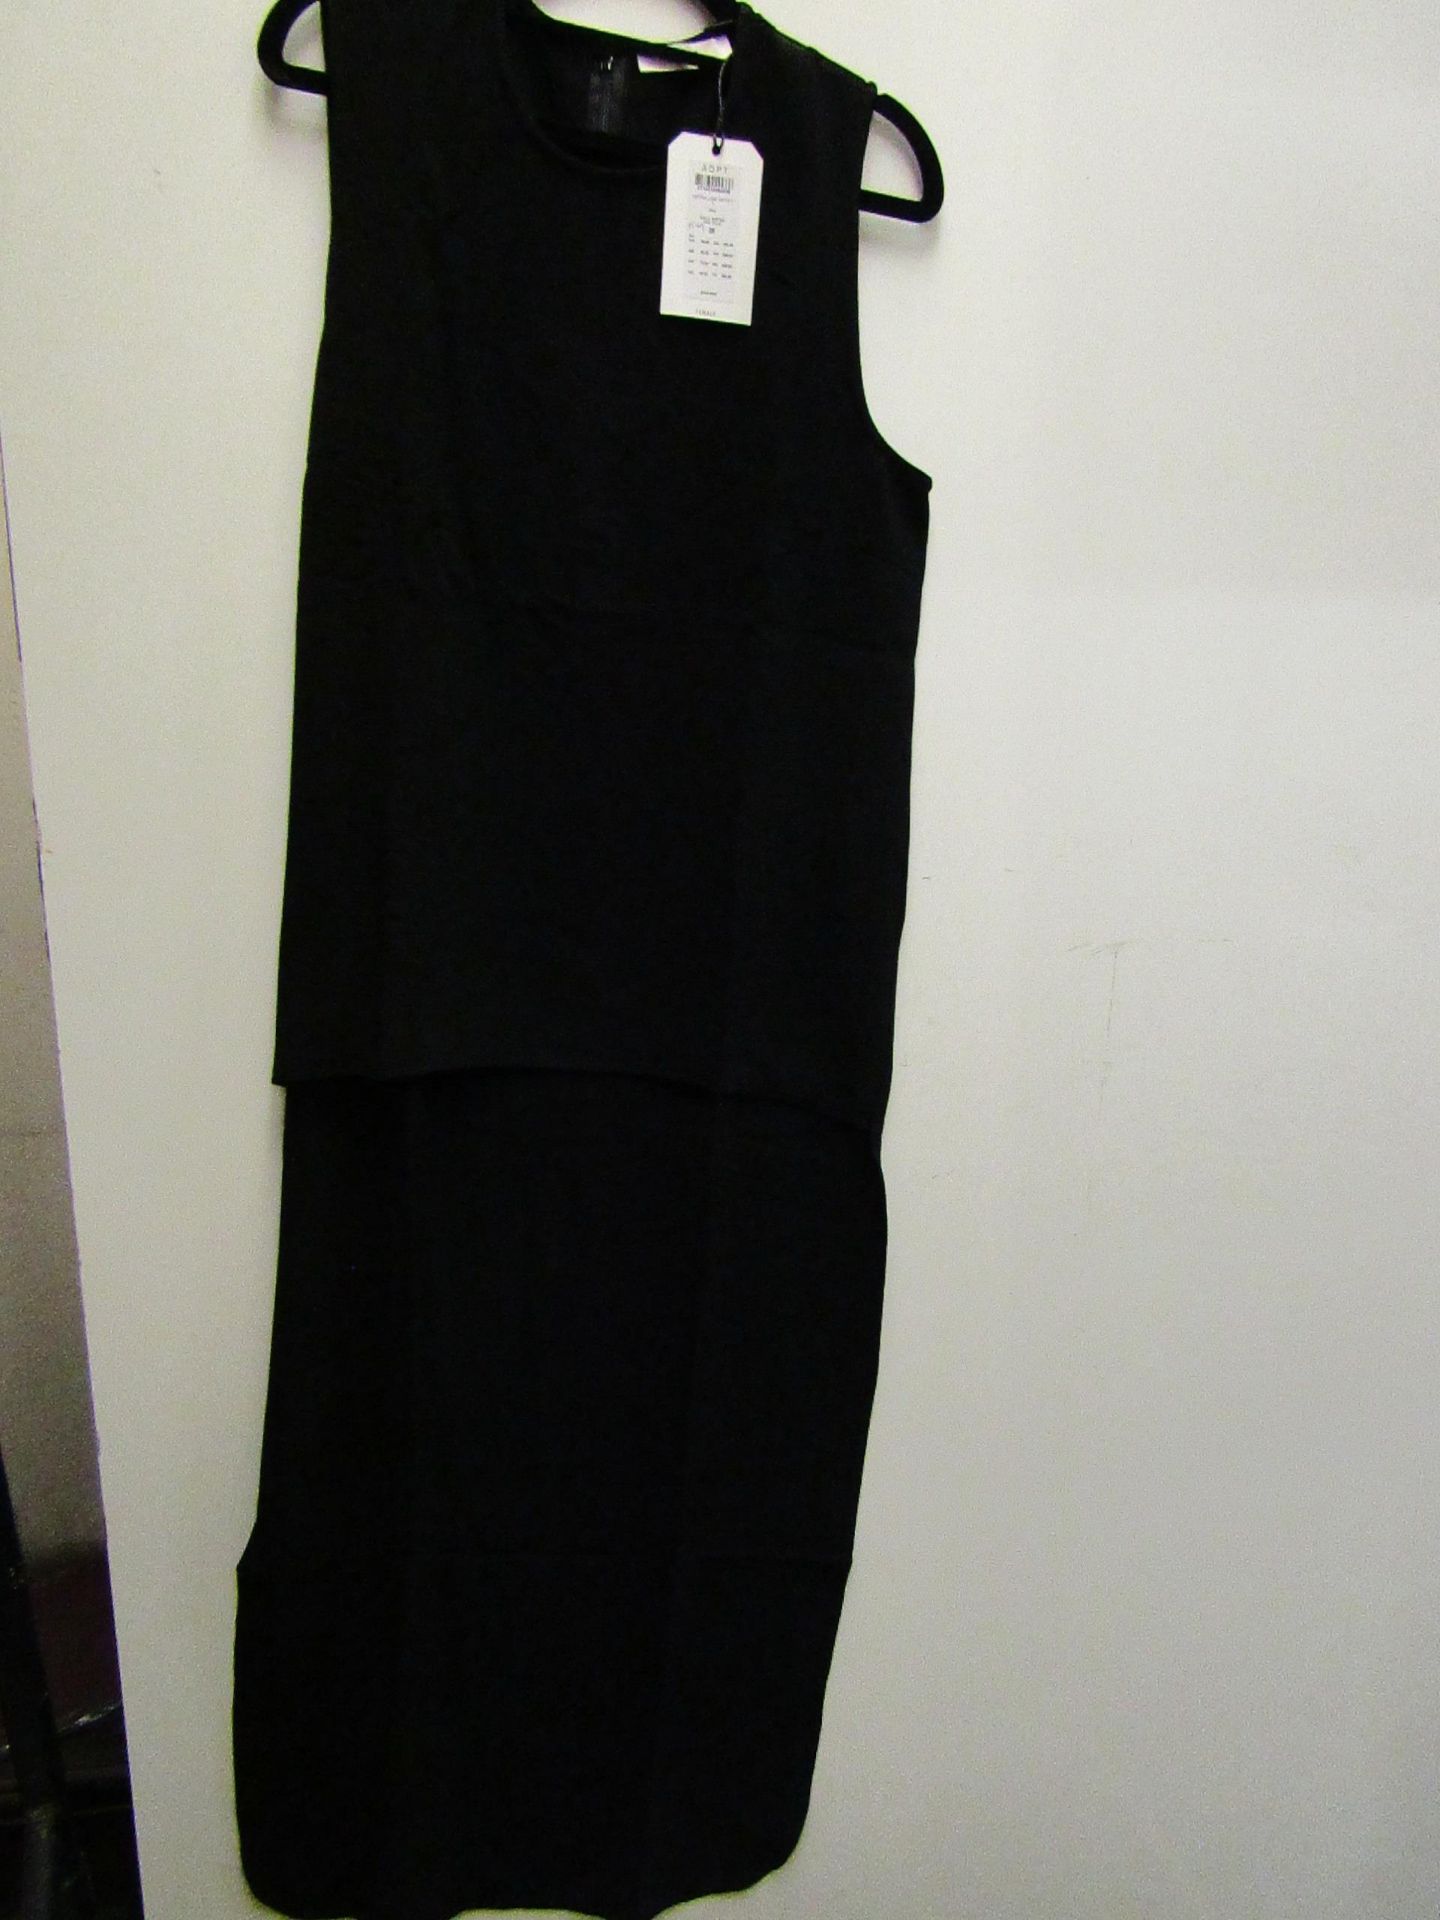 ADPT Ladies Long Black Dress Size S New in Packaging